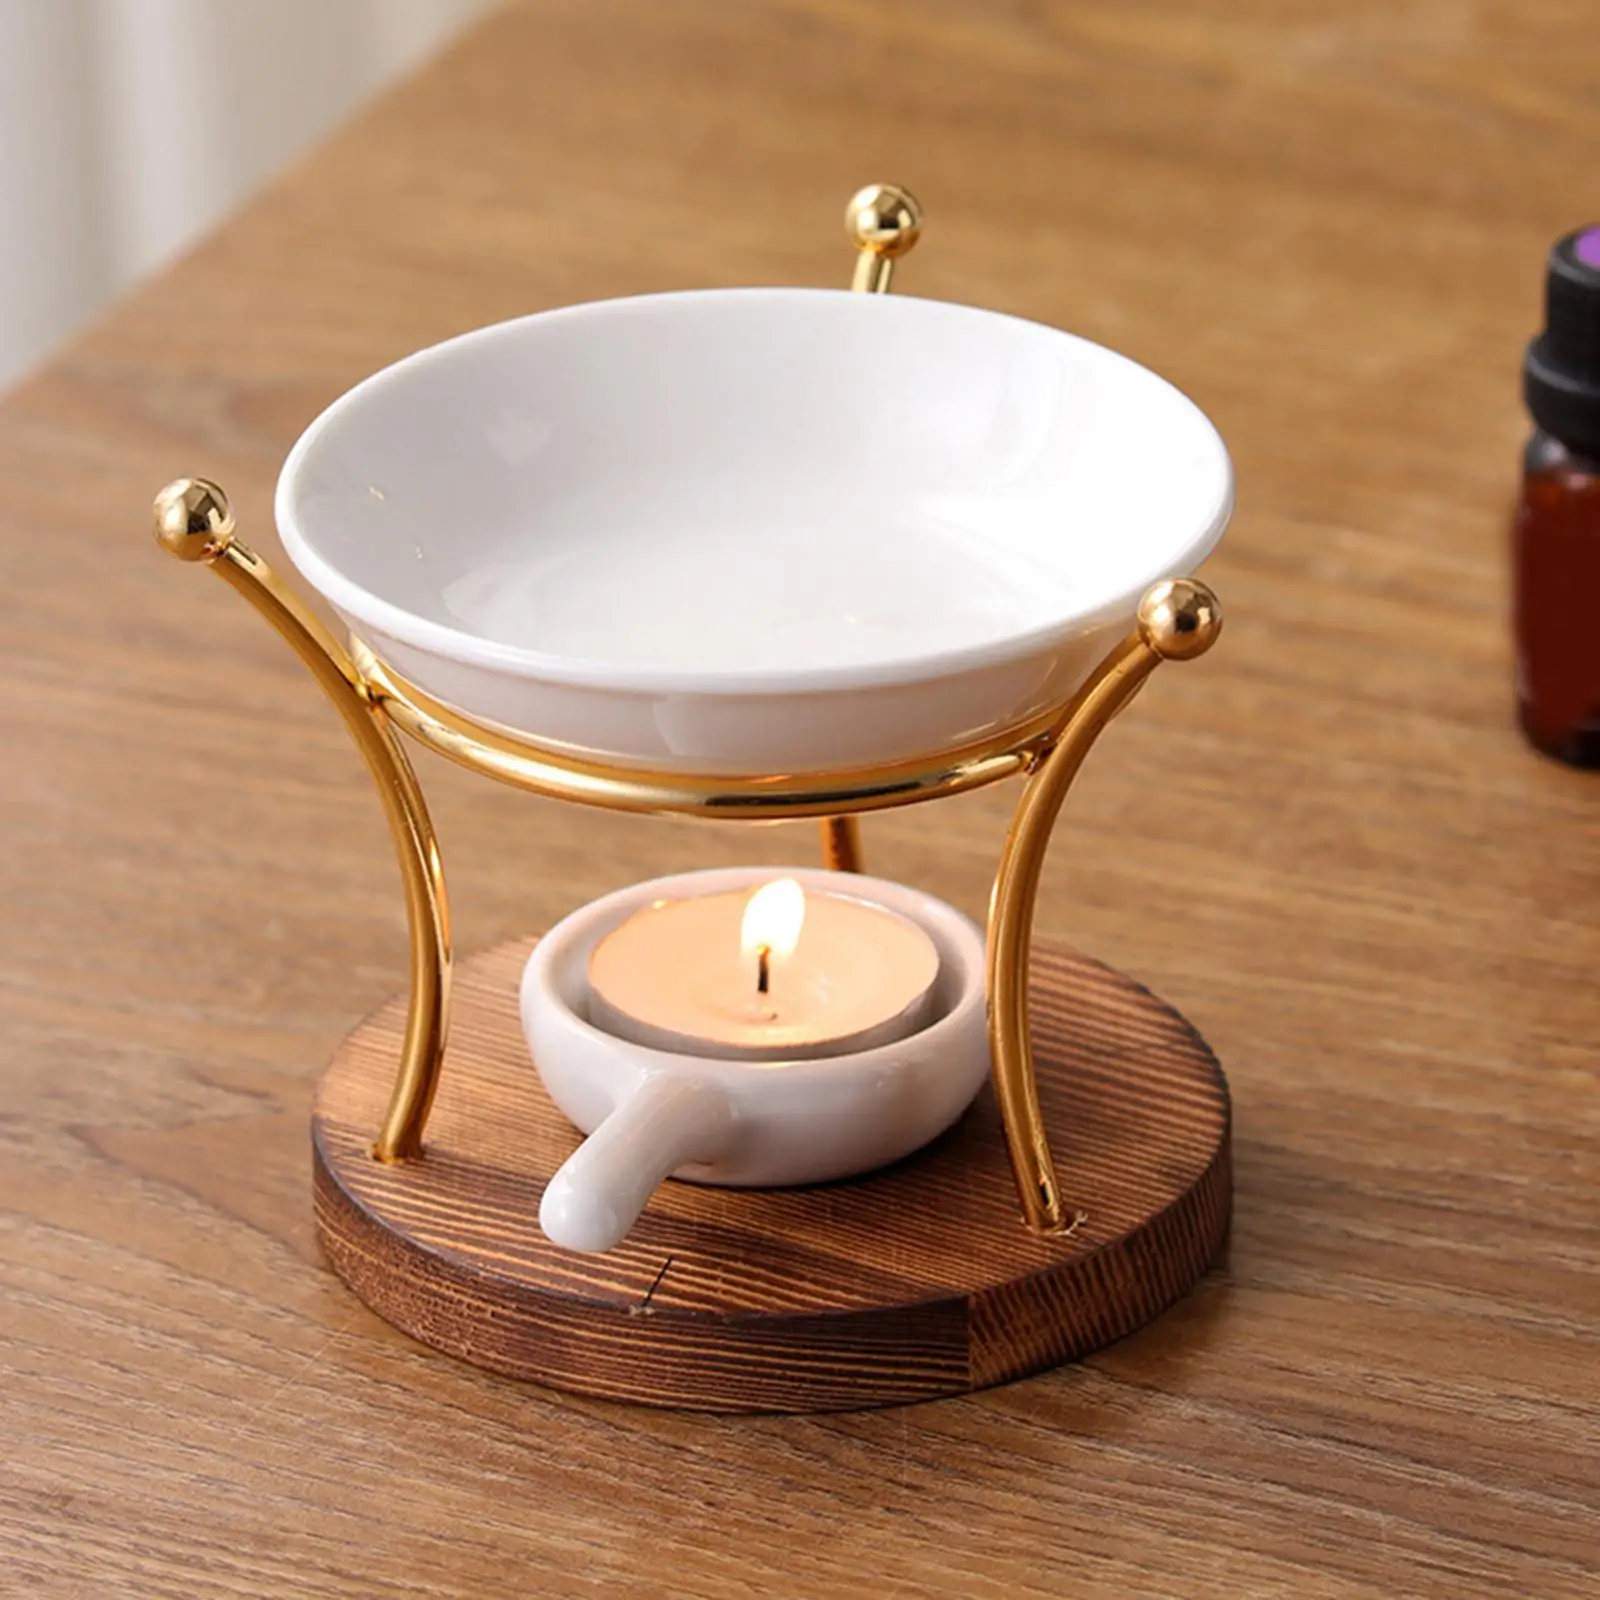 

Delicate Ceramic Tealight Candle Holder Wax Melt Furnace Essential Oil Burner for Home Housewarming Christmas Decor Living Room